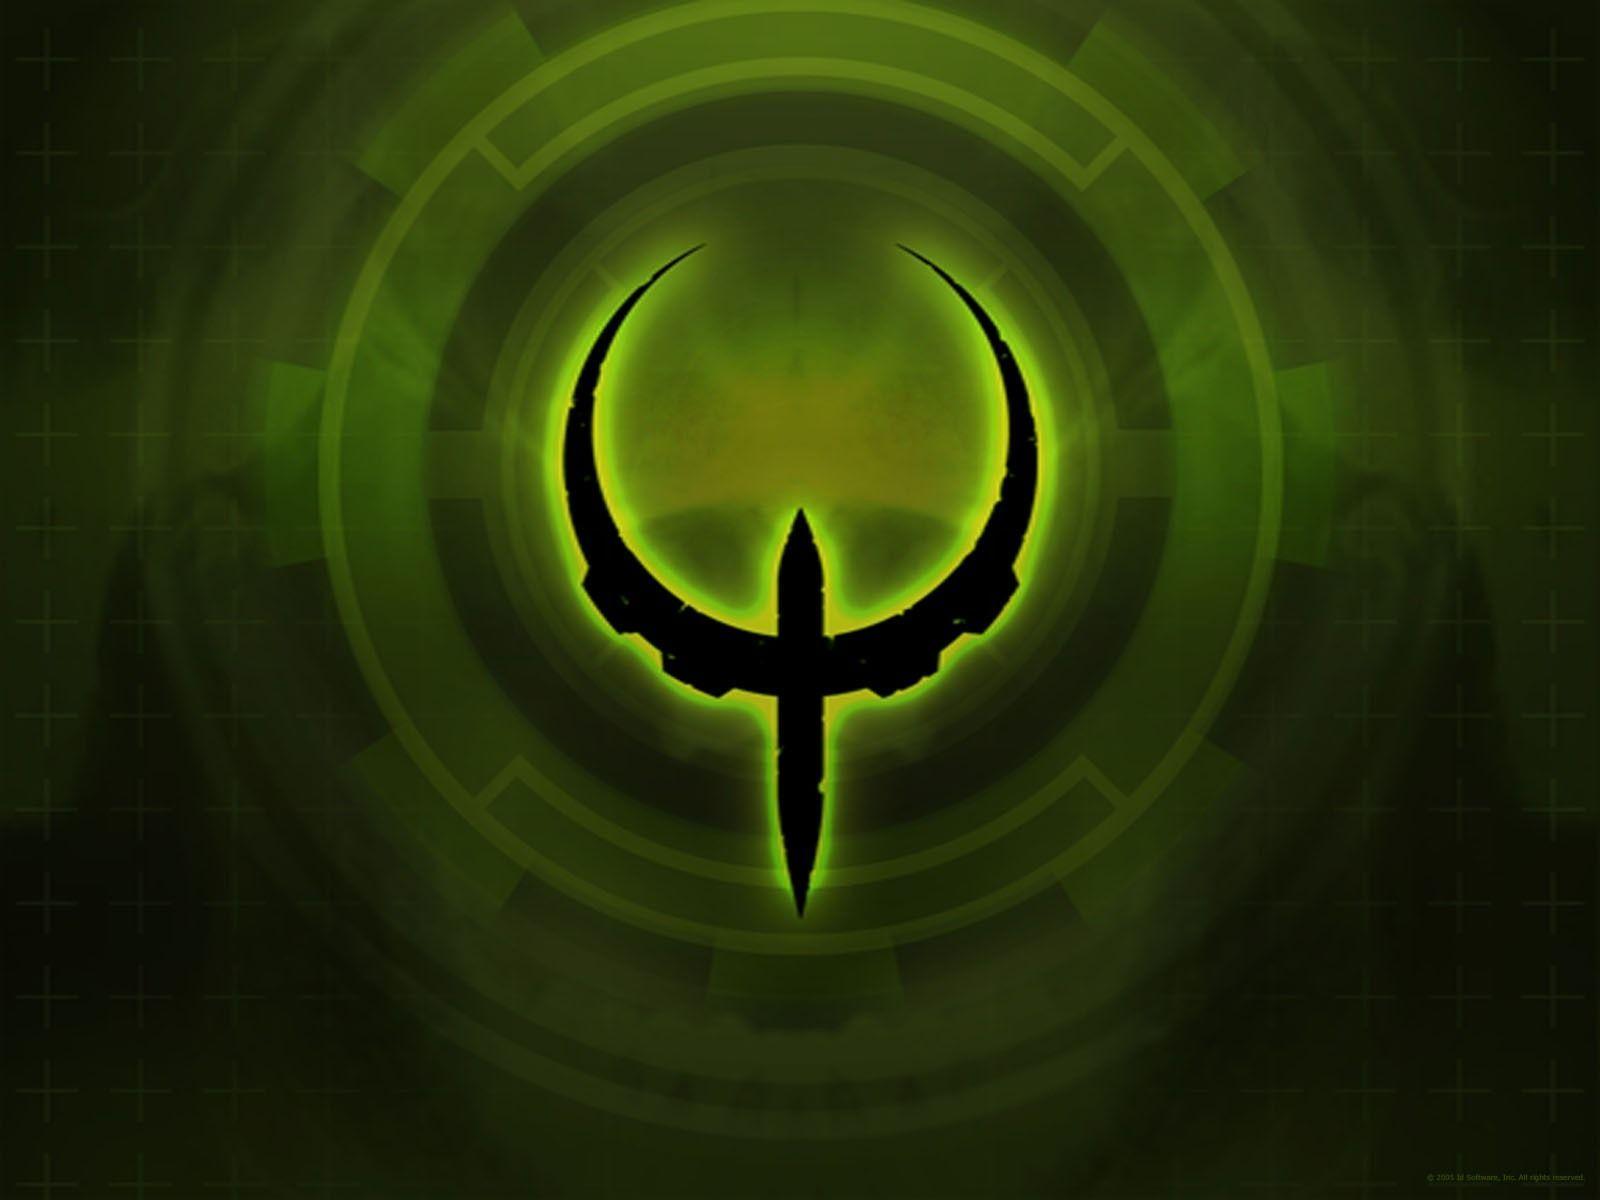 Quake 4 Wallpaper. Quake 4 Background